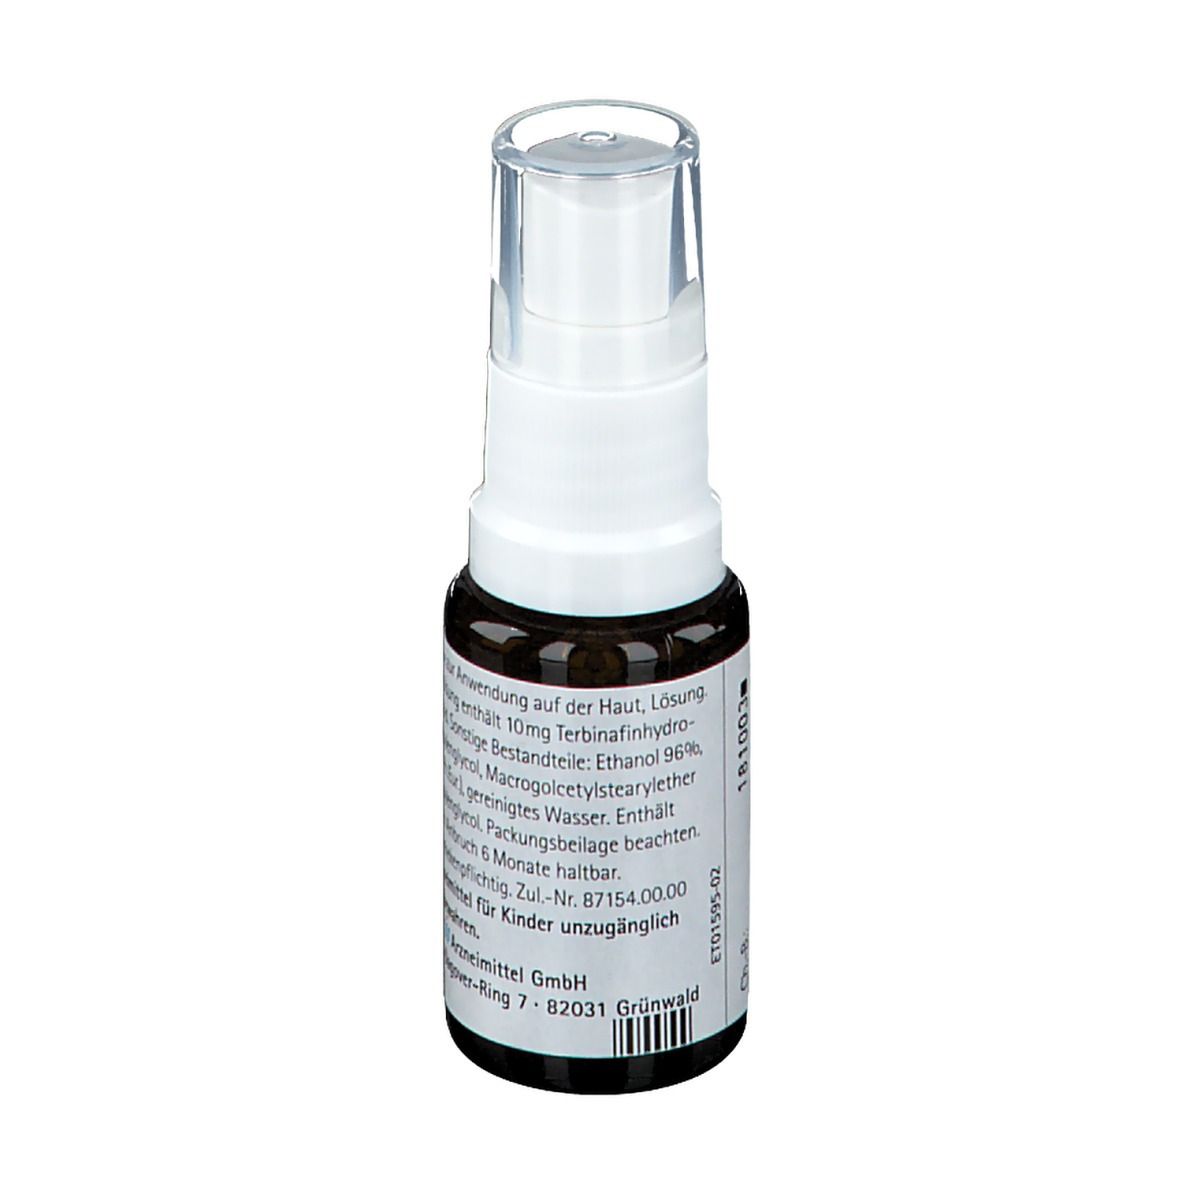 Terbinafin HCL acis® 10mg/g Spray